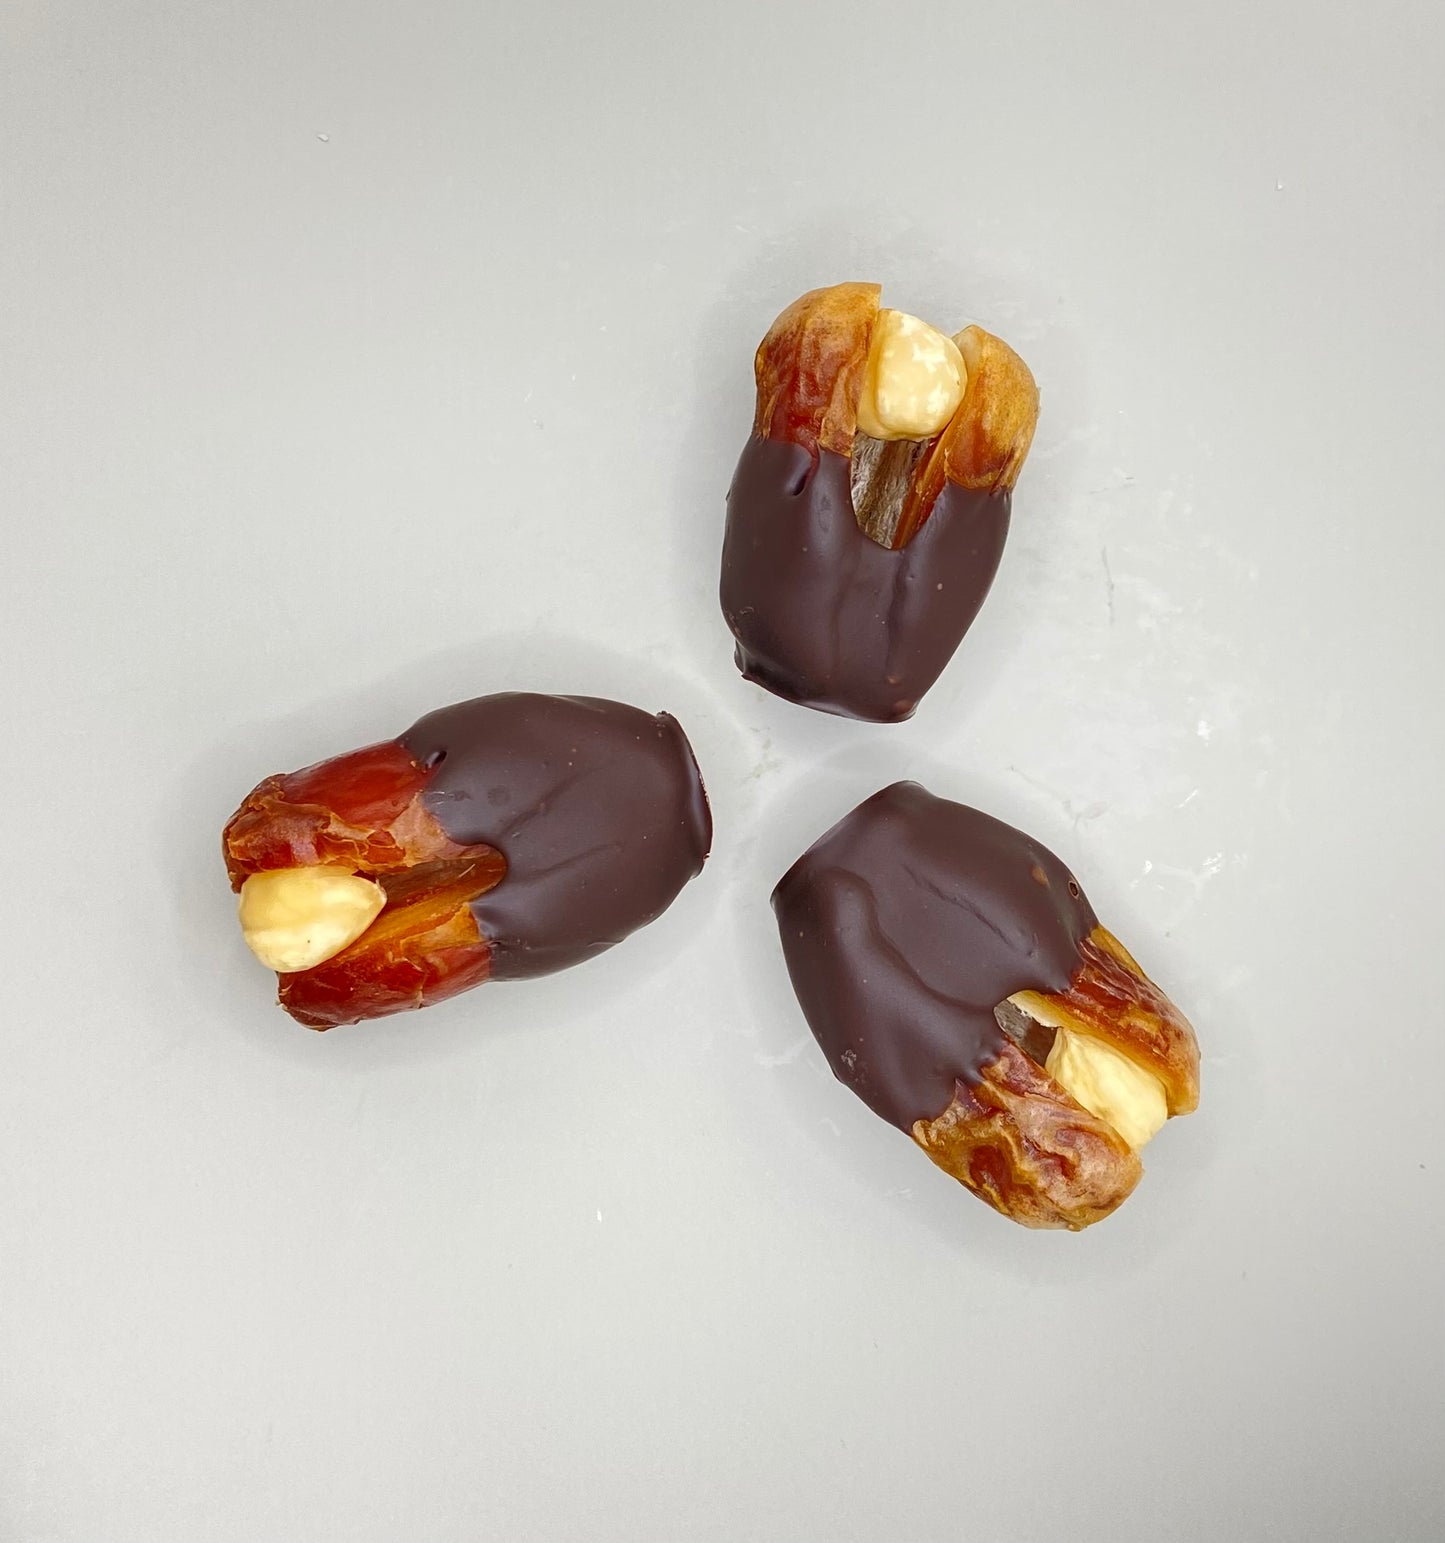 Coffee Chocolate Dates Stuffed With Nuts